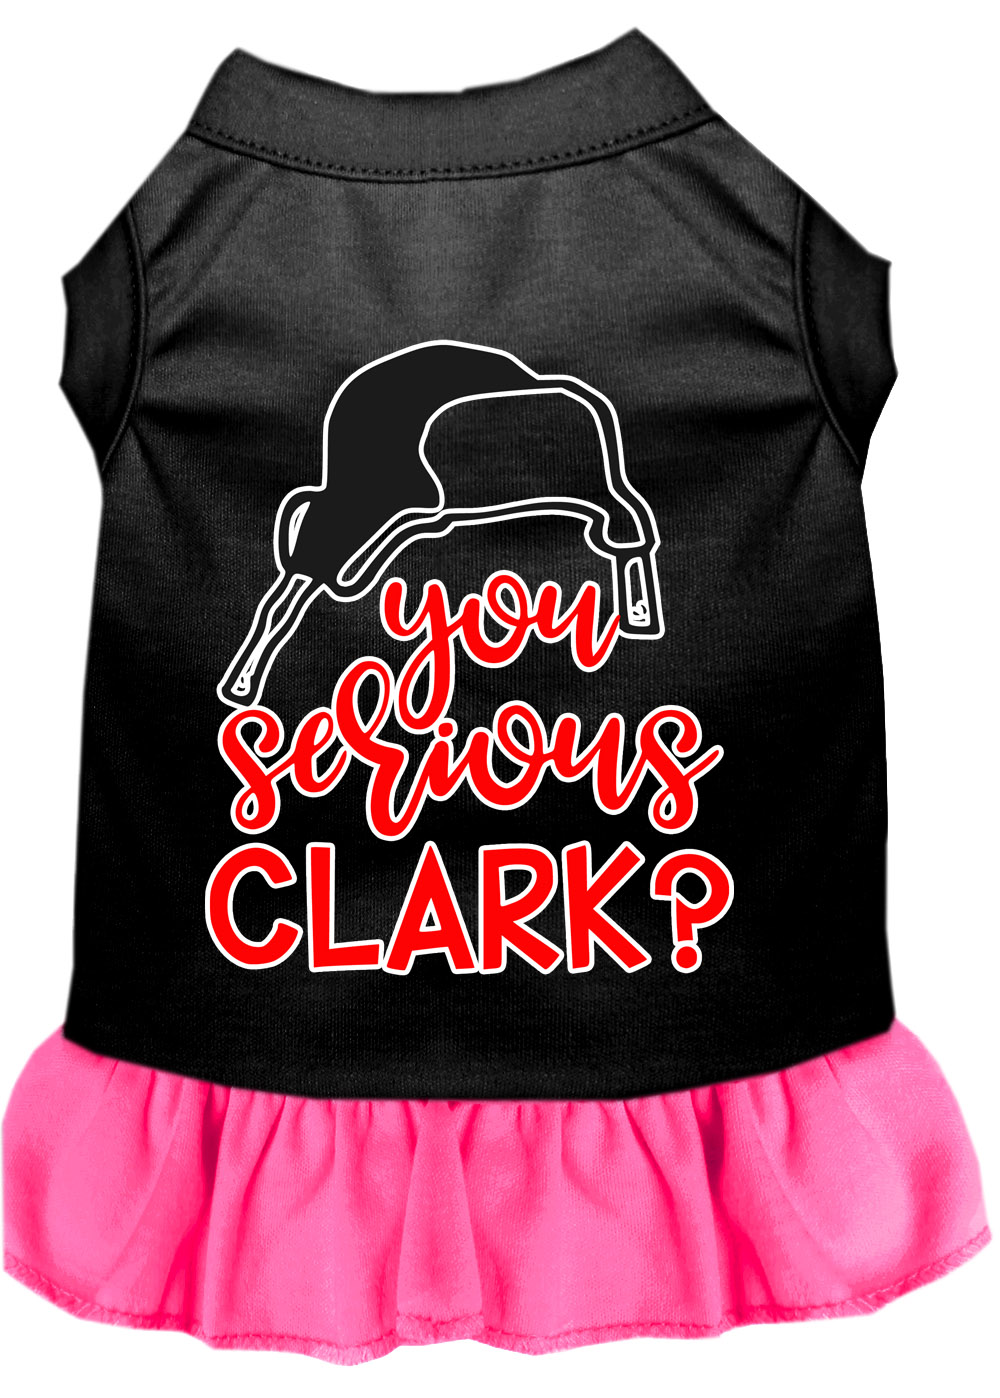 You Serious Clark? Screen Print Dog Dress Black with Bright Pink XXXL